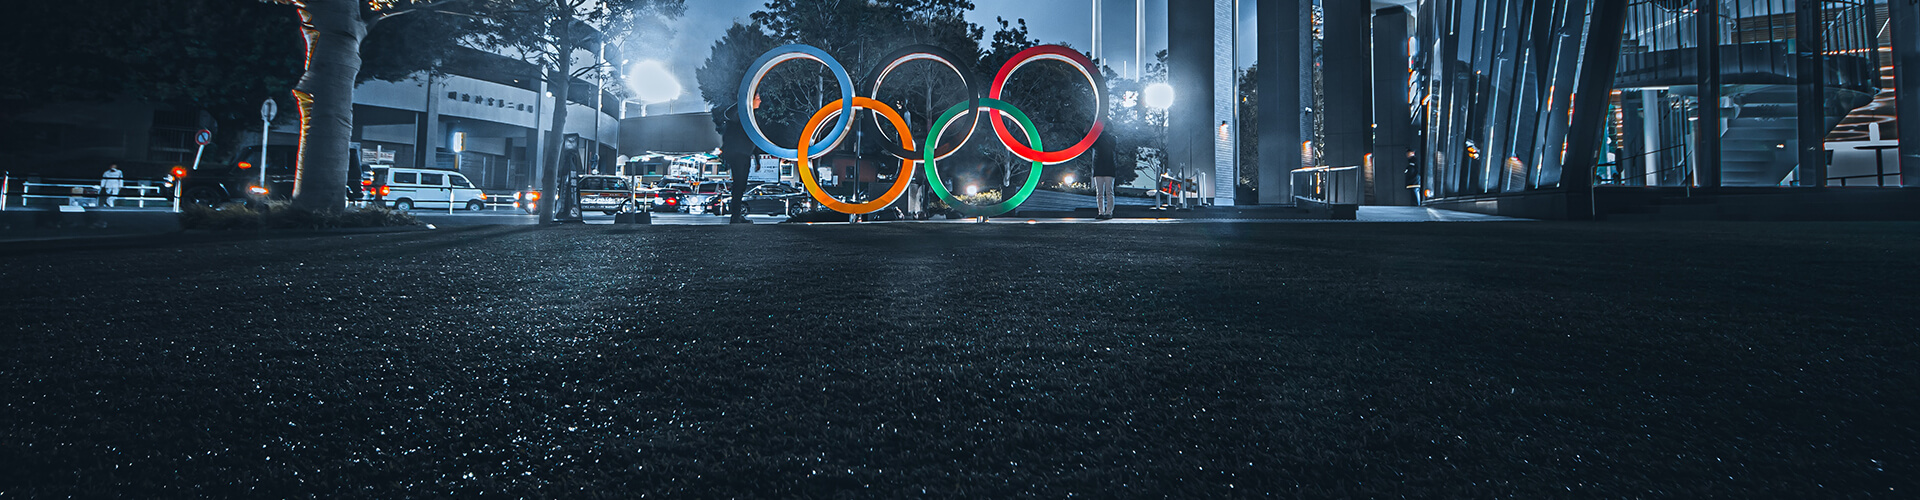 brisbane olympic rings